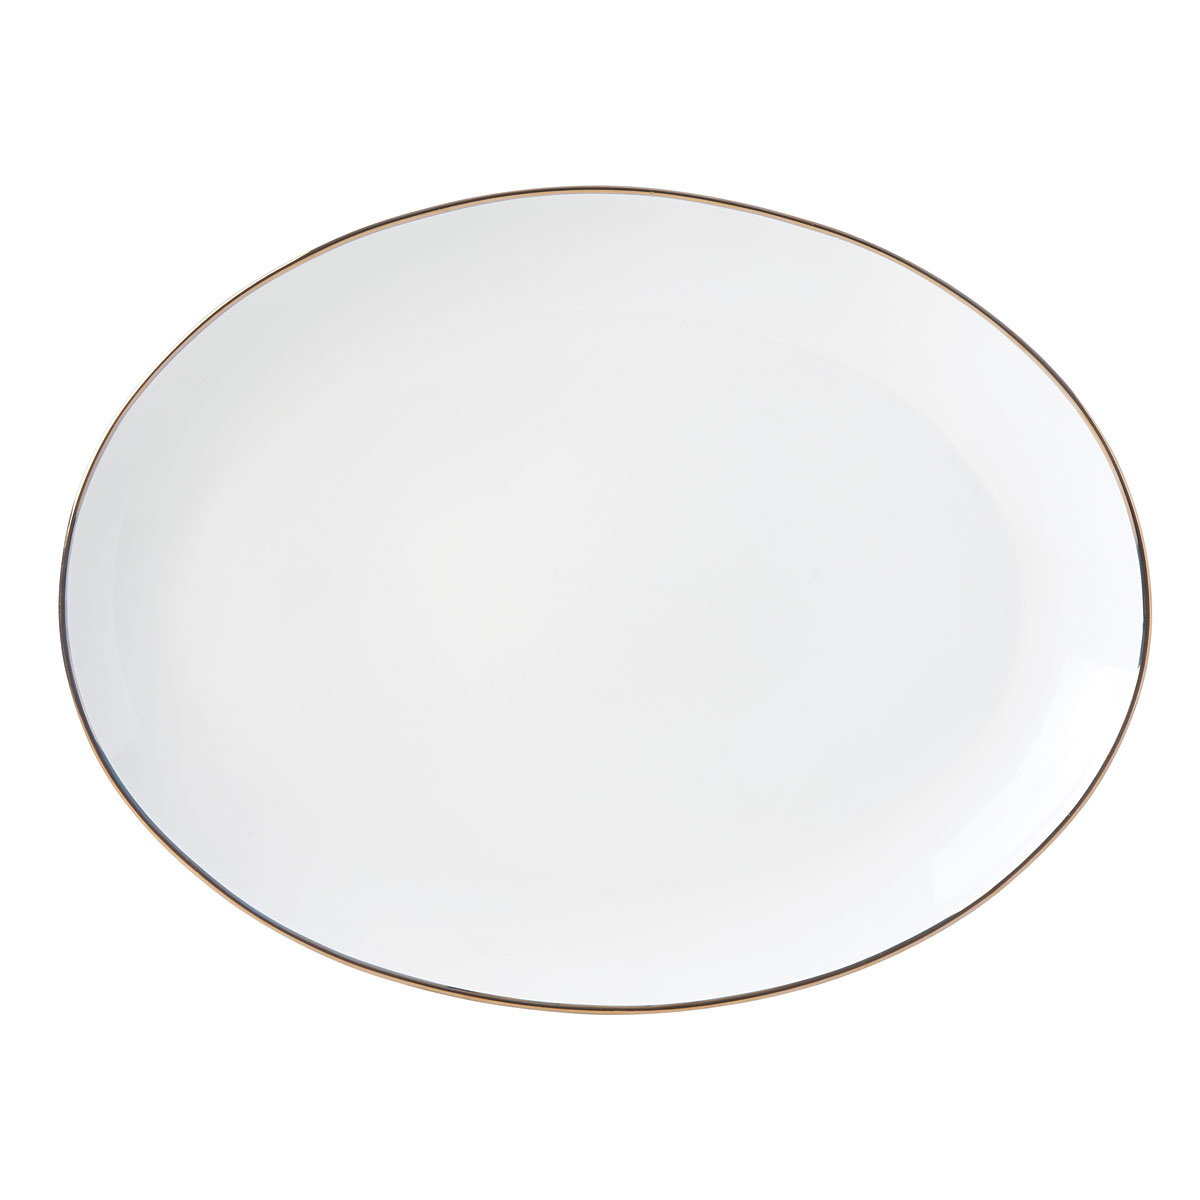 Lenox Trianna White Dinnerware Platter